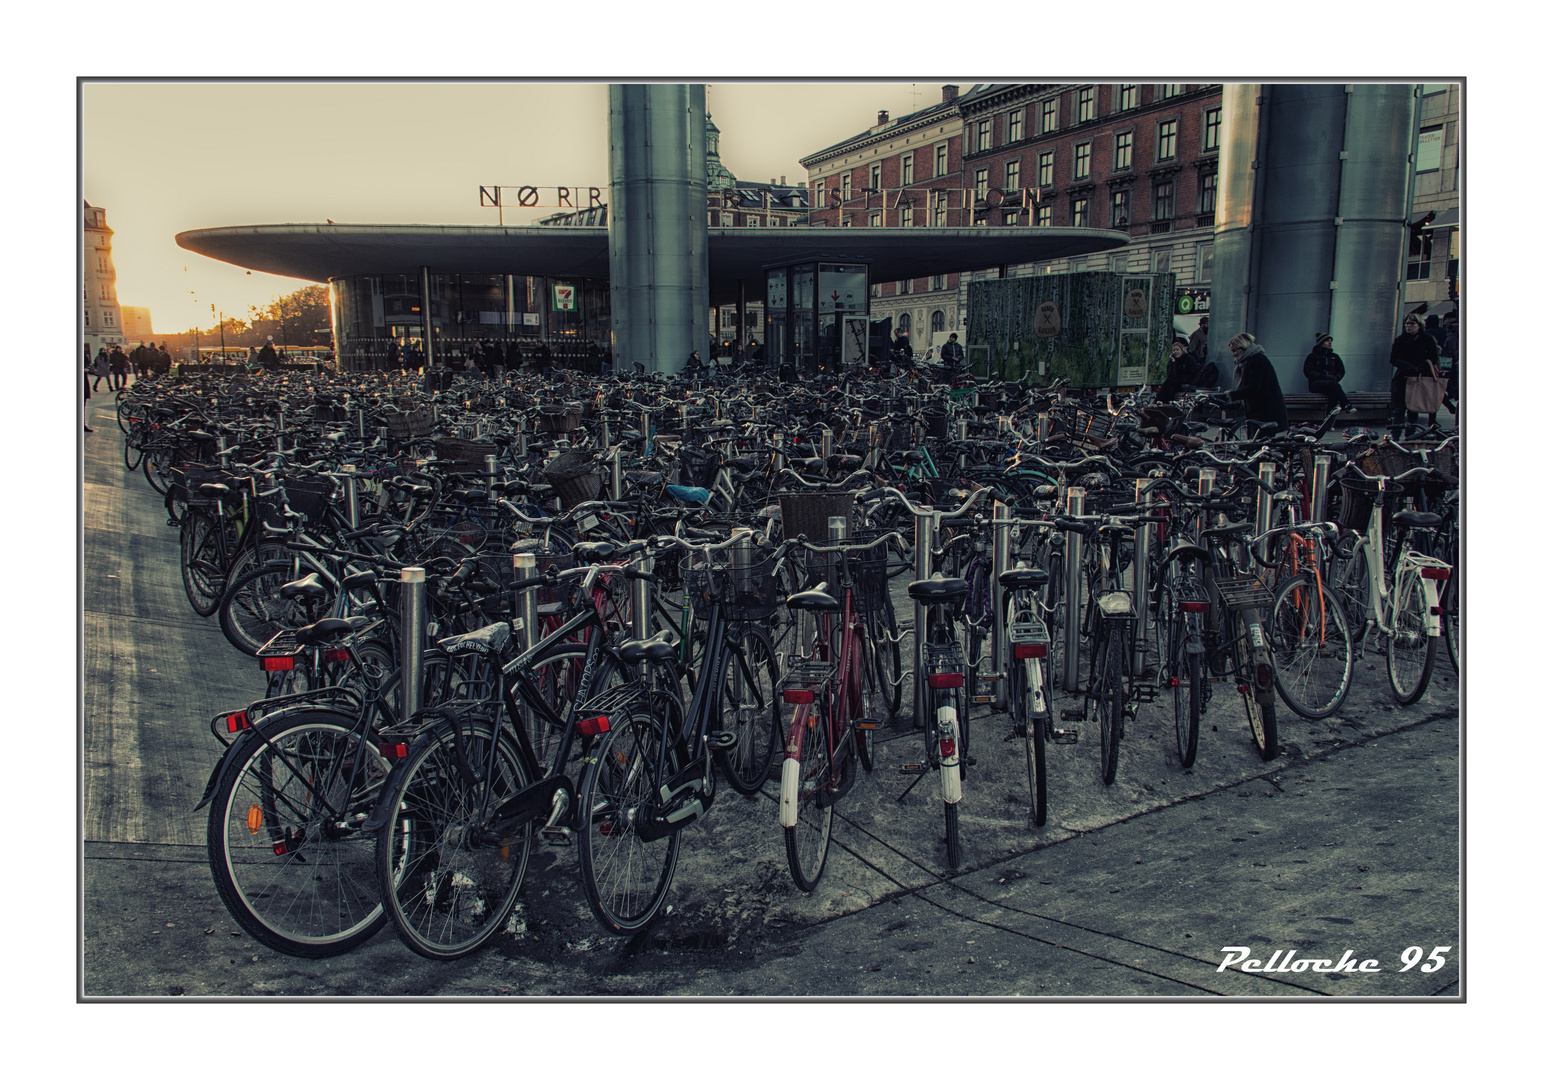 Parking à vélos